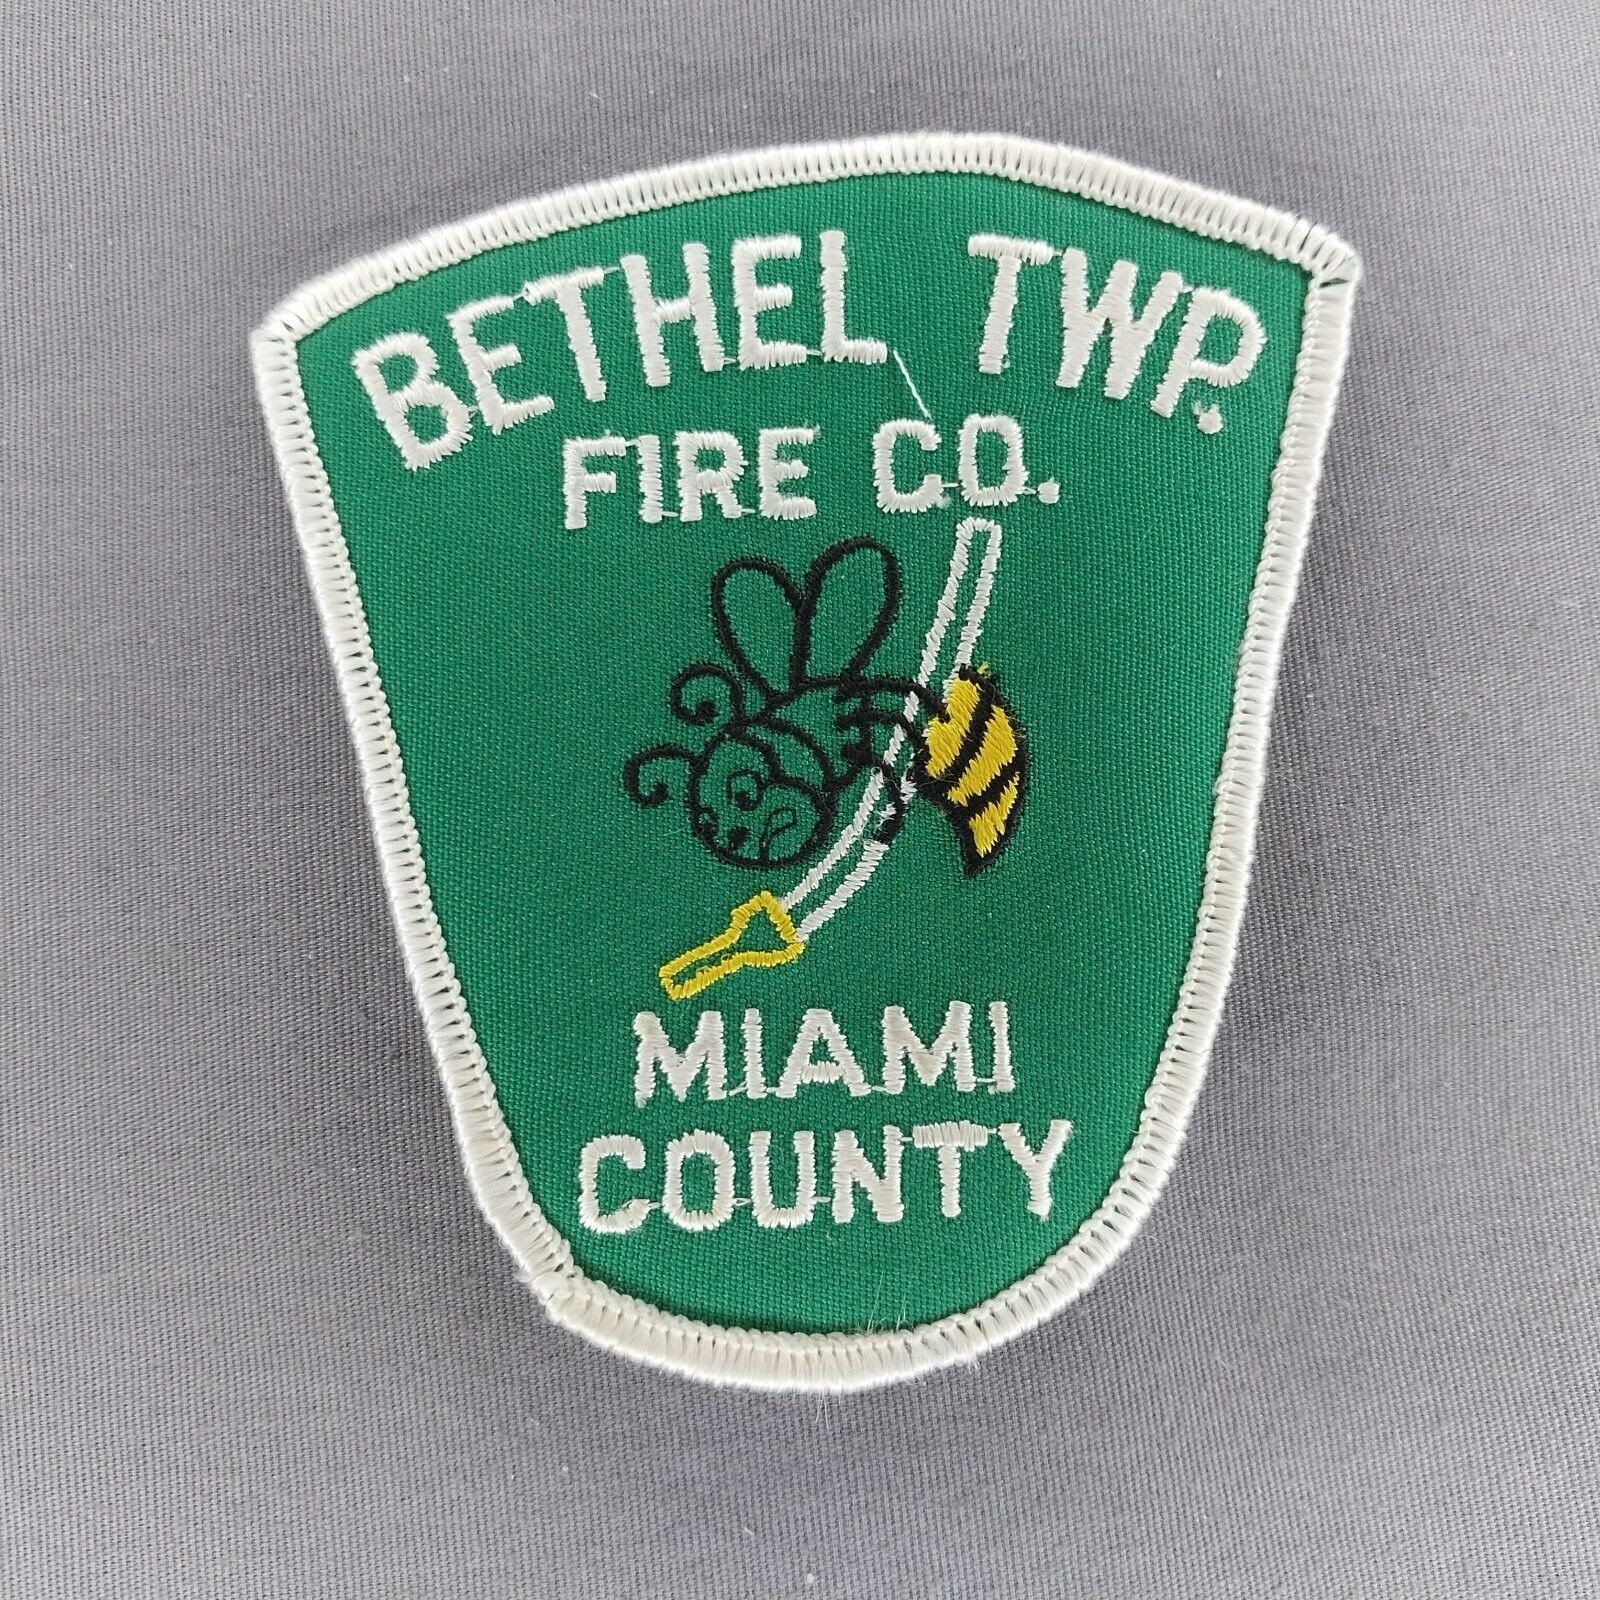 Bethel Township (Miami County) OH Ohio Fire Dept. Co. 4